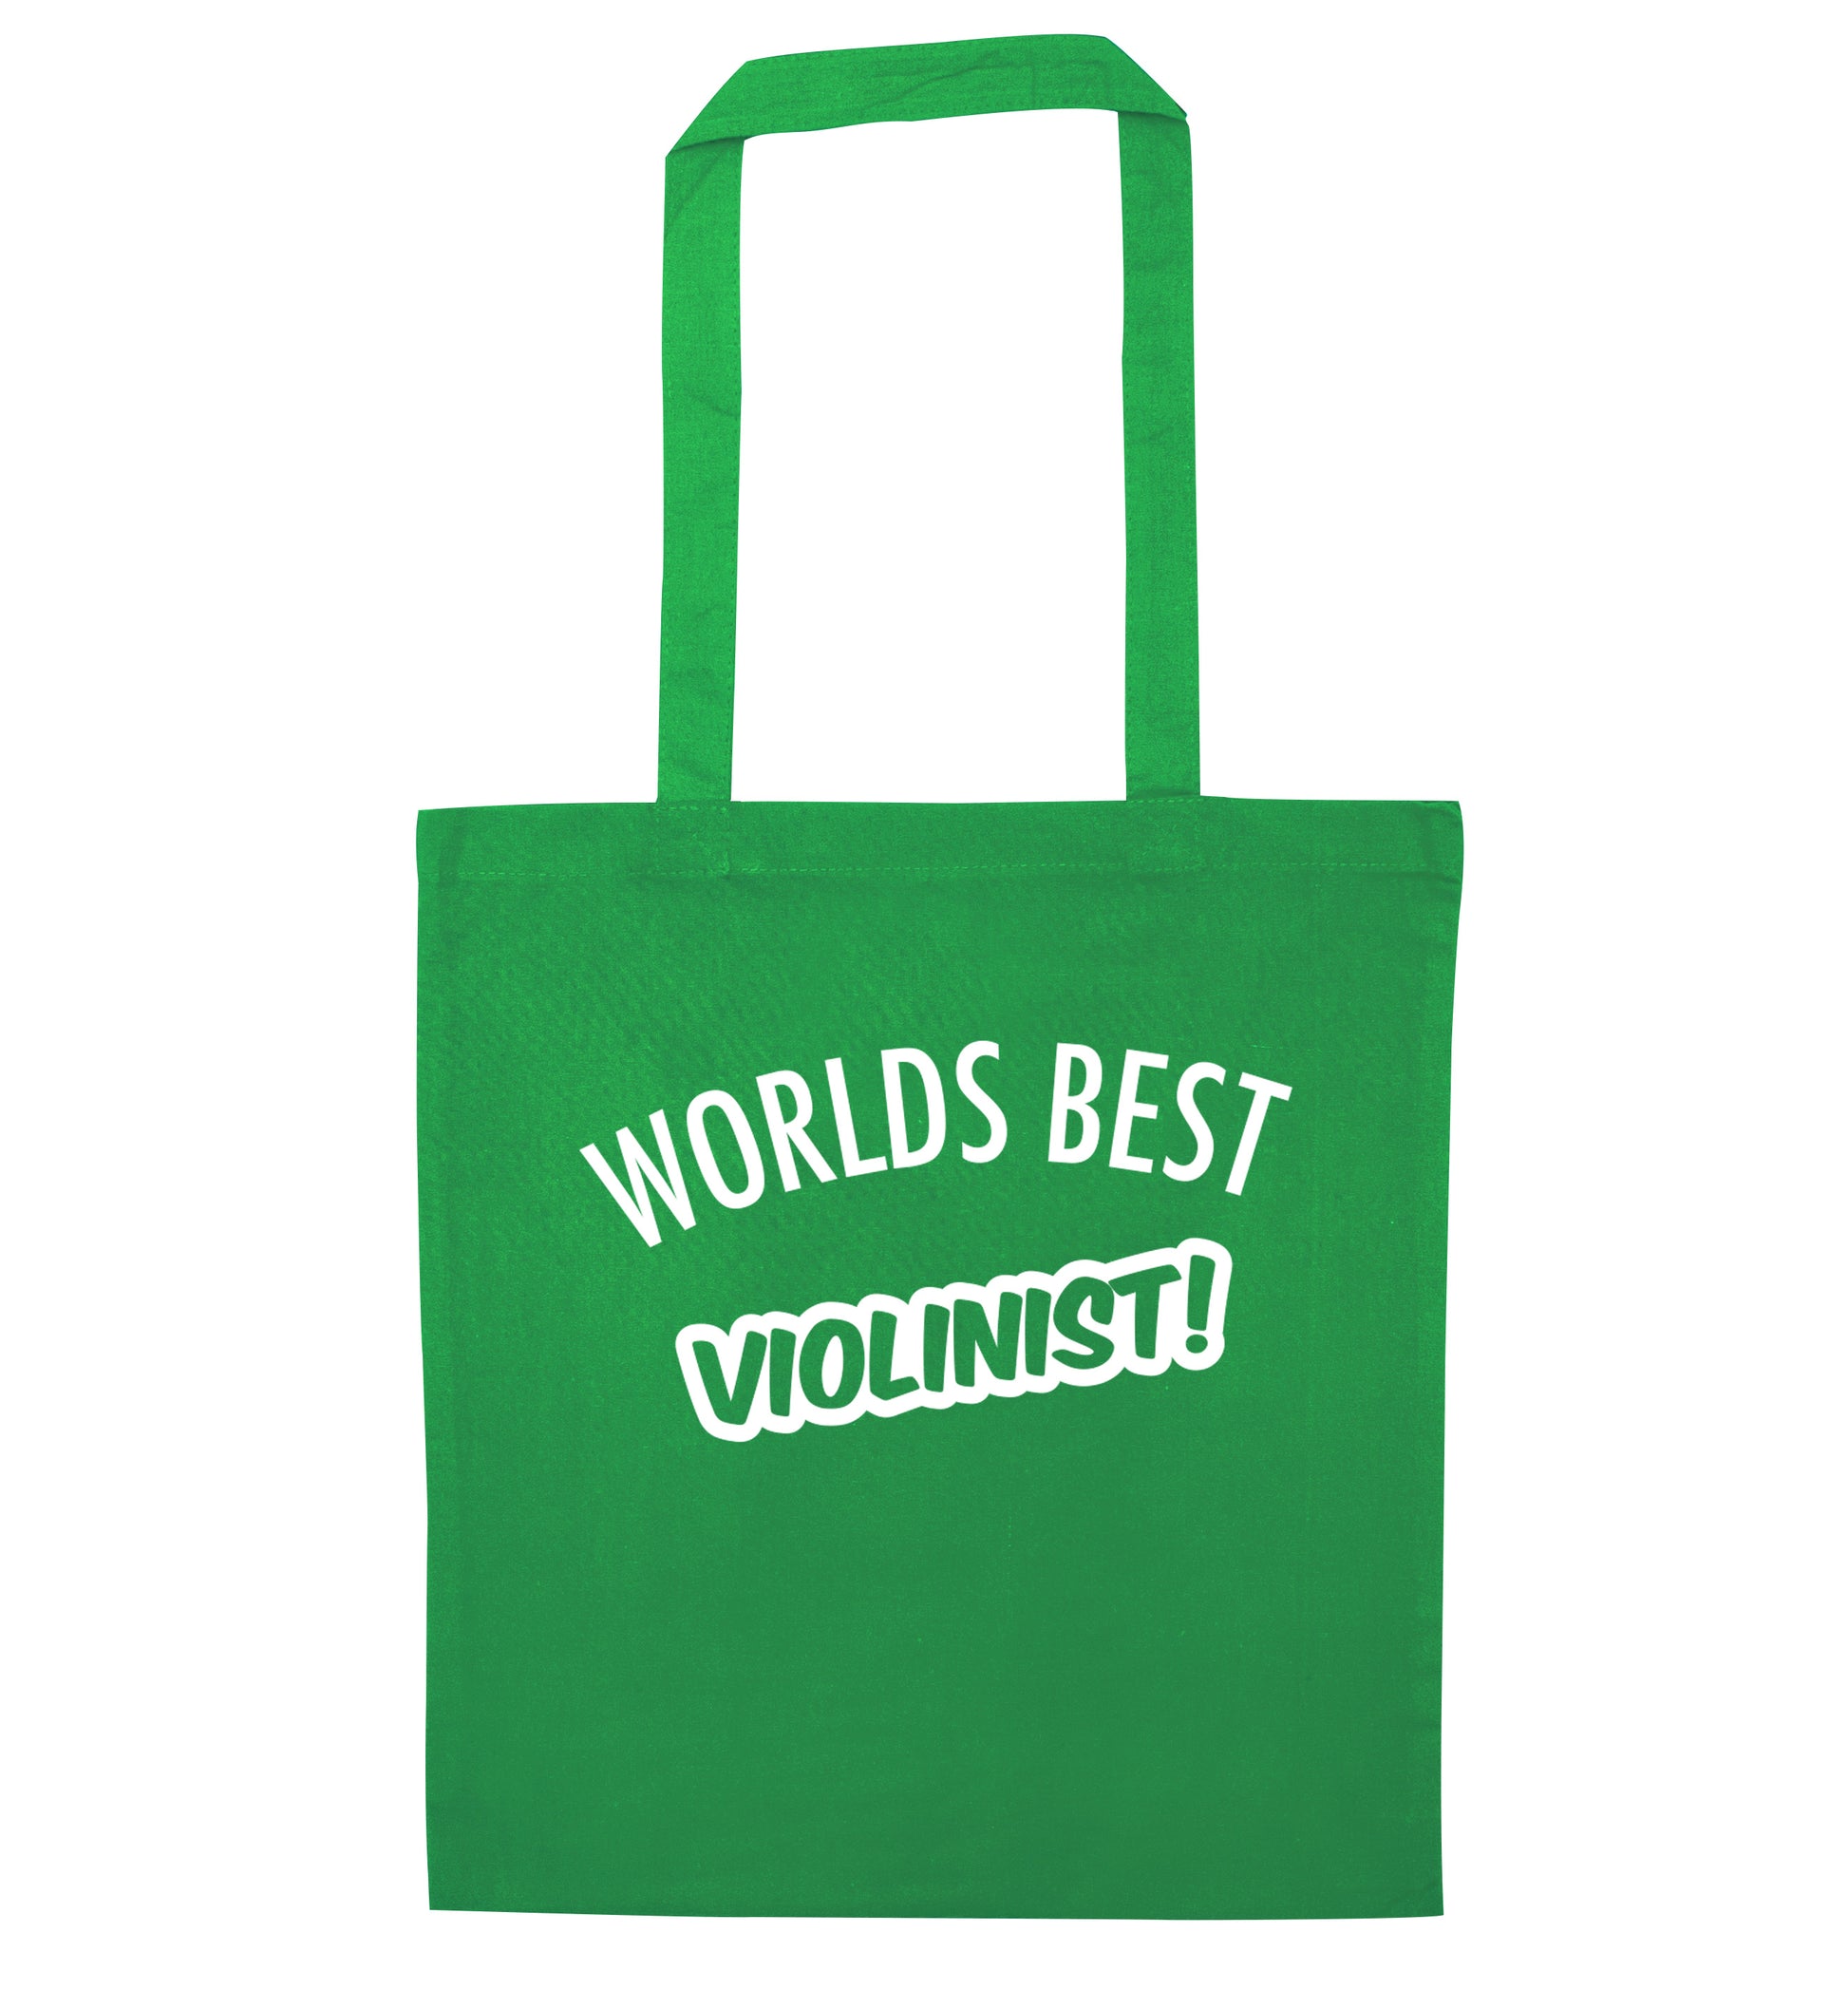 Worlds best violinist green tote bag